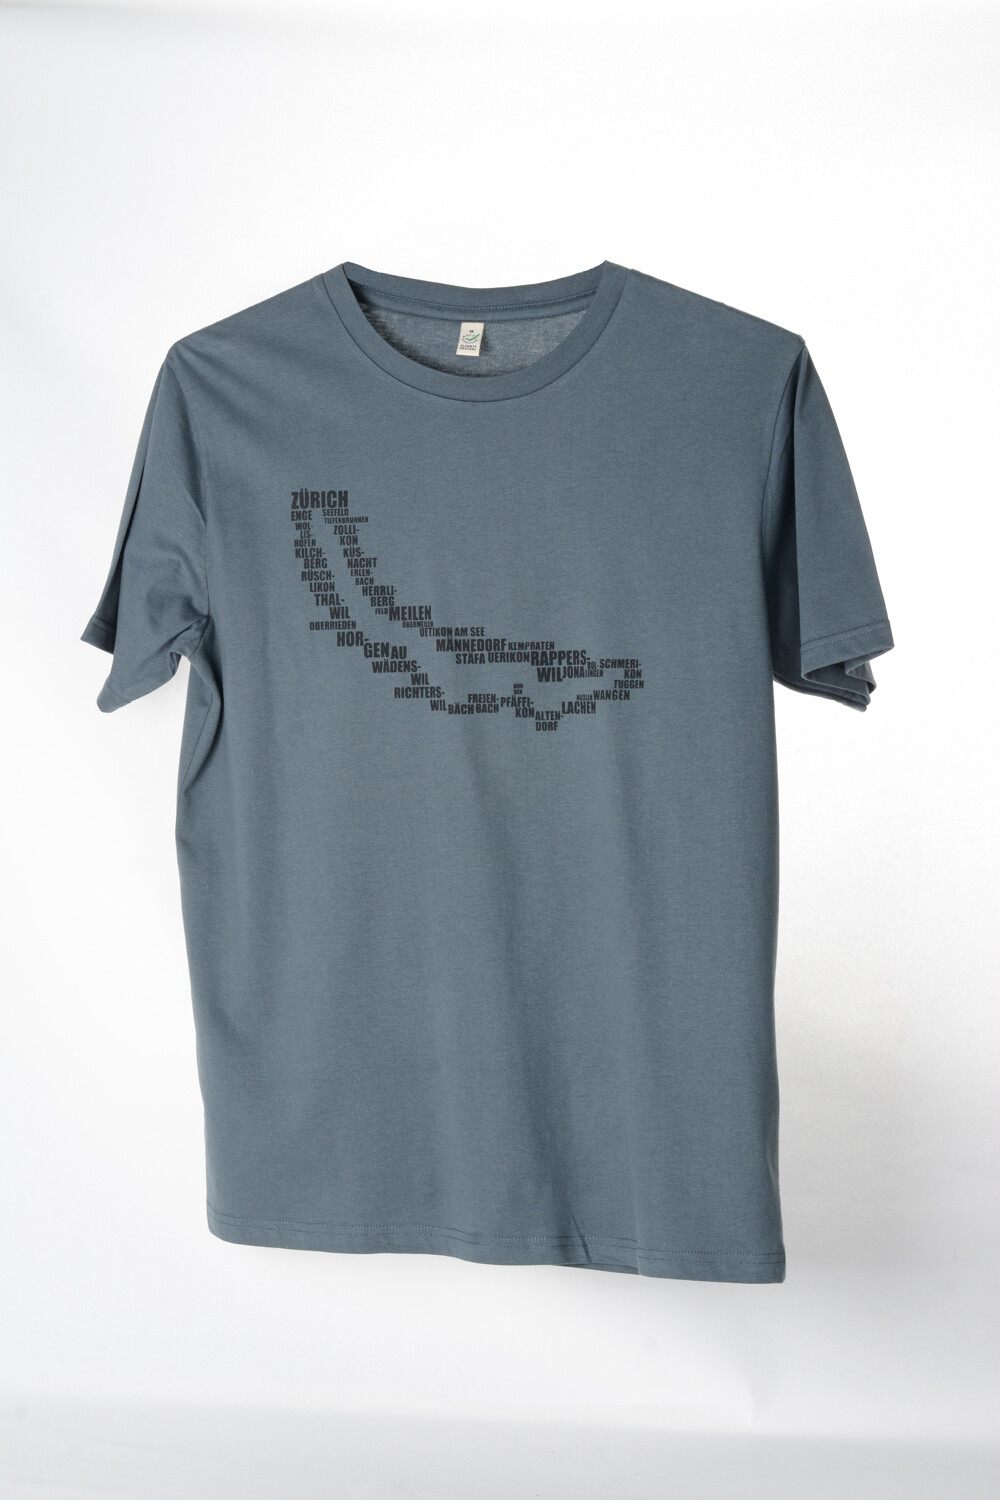 T-Shirt Zürisee (unisex) grau